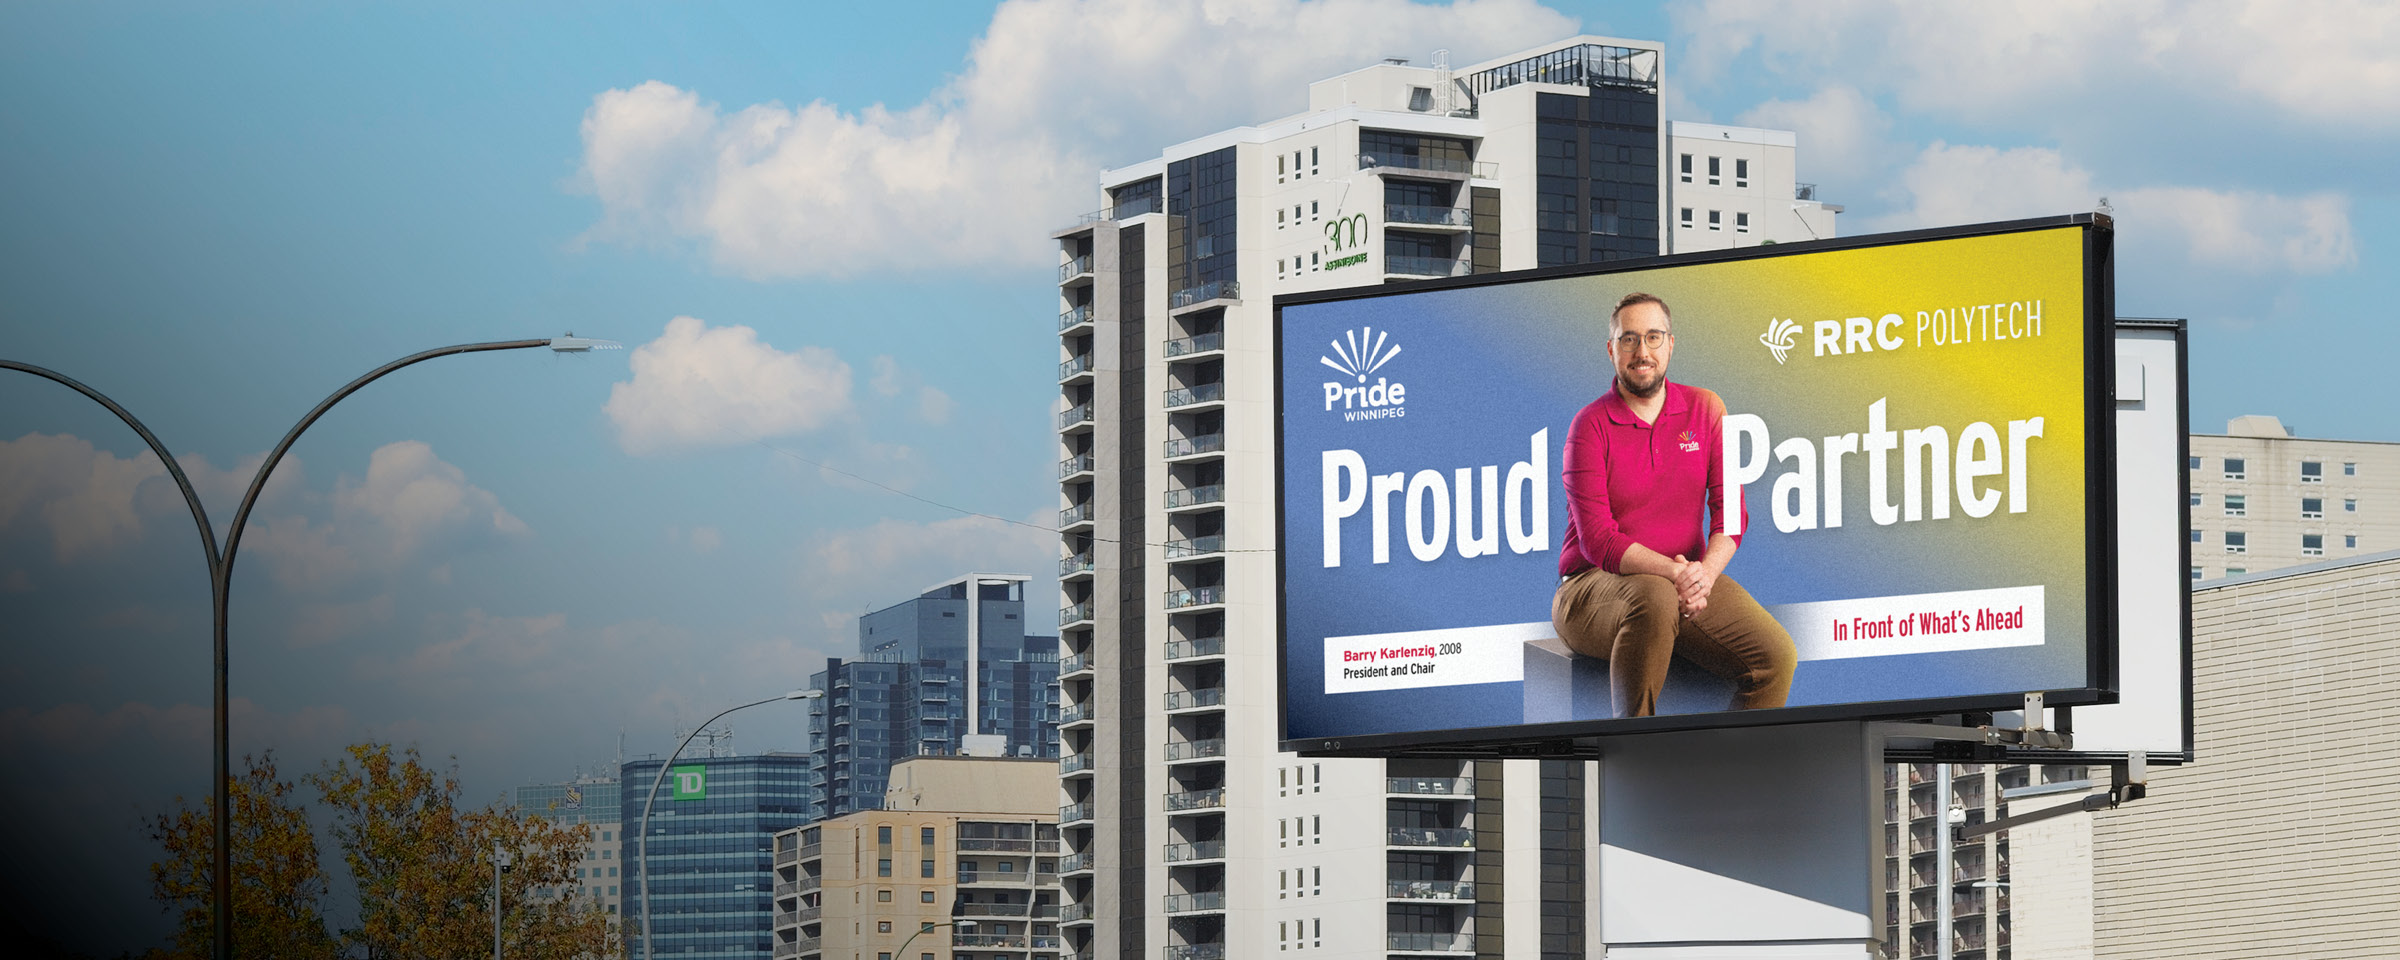 Winnipeg skyline with "Proud Partner" billboard of RRC Polytech graduate Barry Karlenzig.